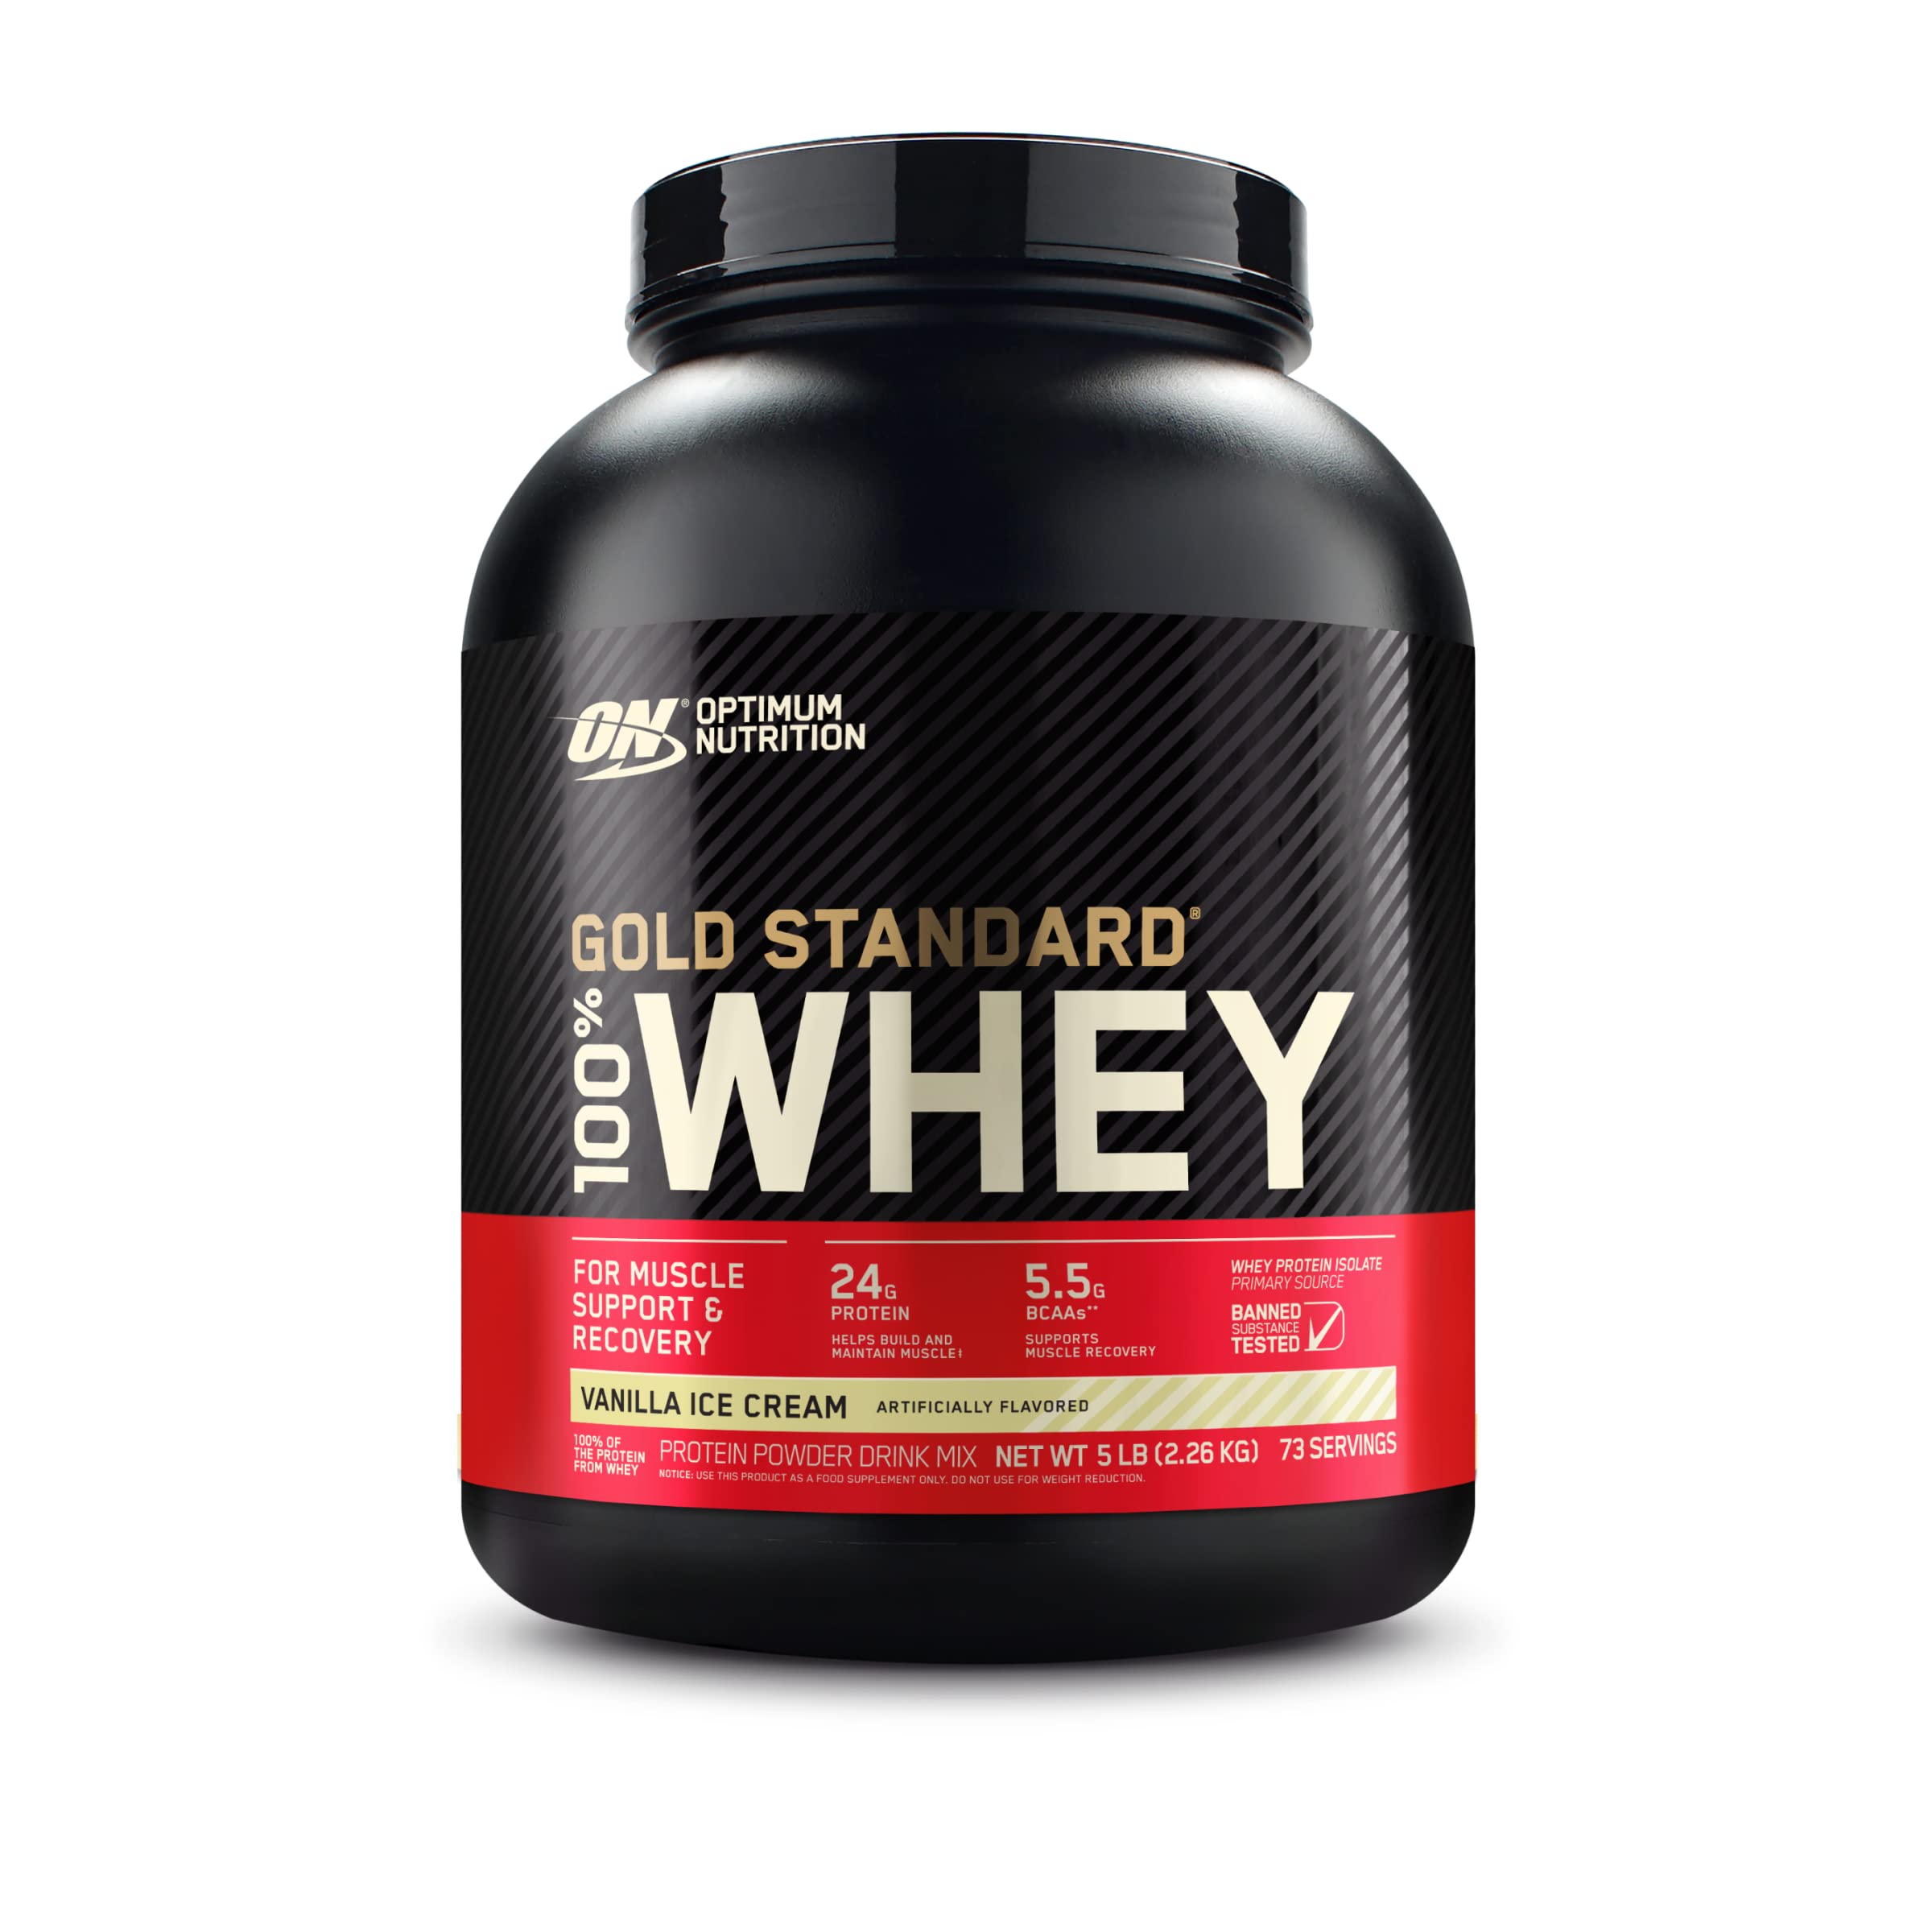 5-LB Optimum Nutrition Gold Standard 100% Whey Protein Powder (Vanilla Ice Cream) $53.16 w/ S&S & More + Free Shipping